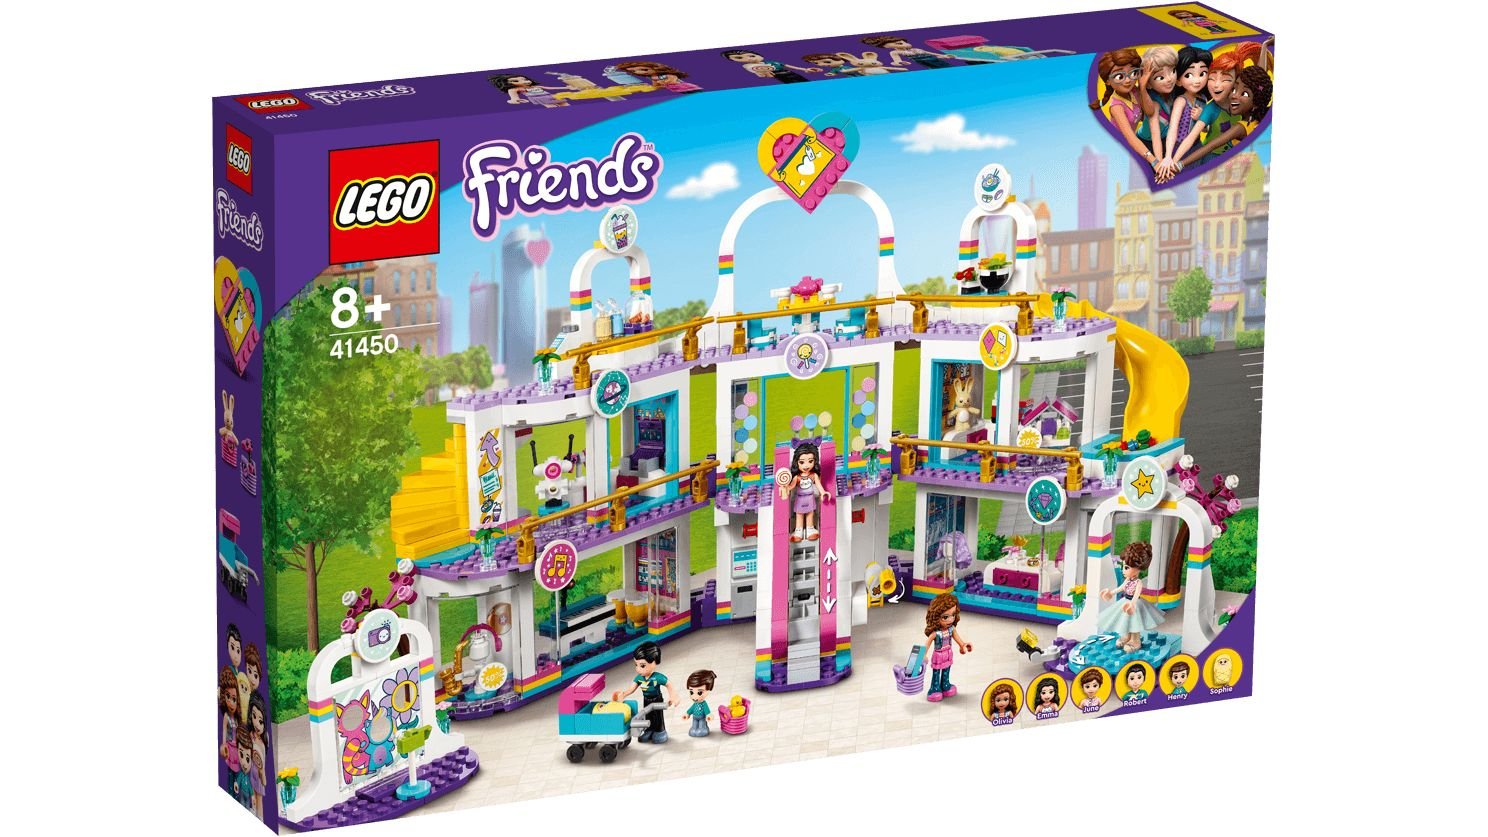 LEGO Friends 41450 Heartlake City Kaufhaus LEGO_41450_Box1_v29_1488.jpg